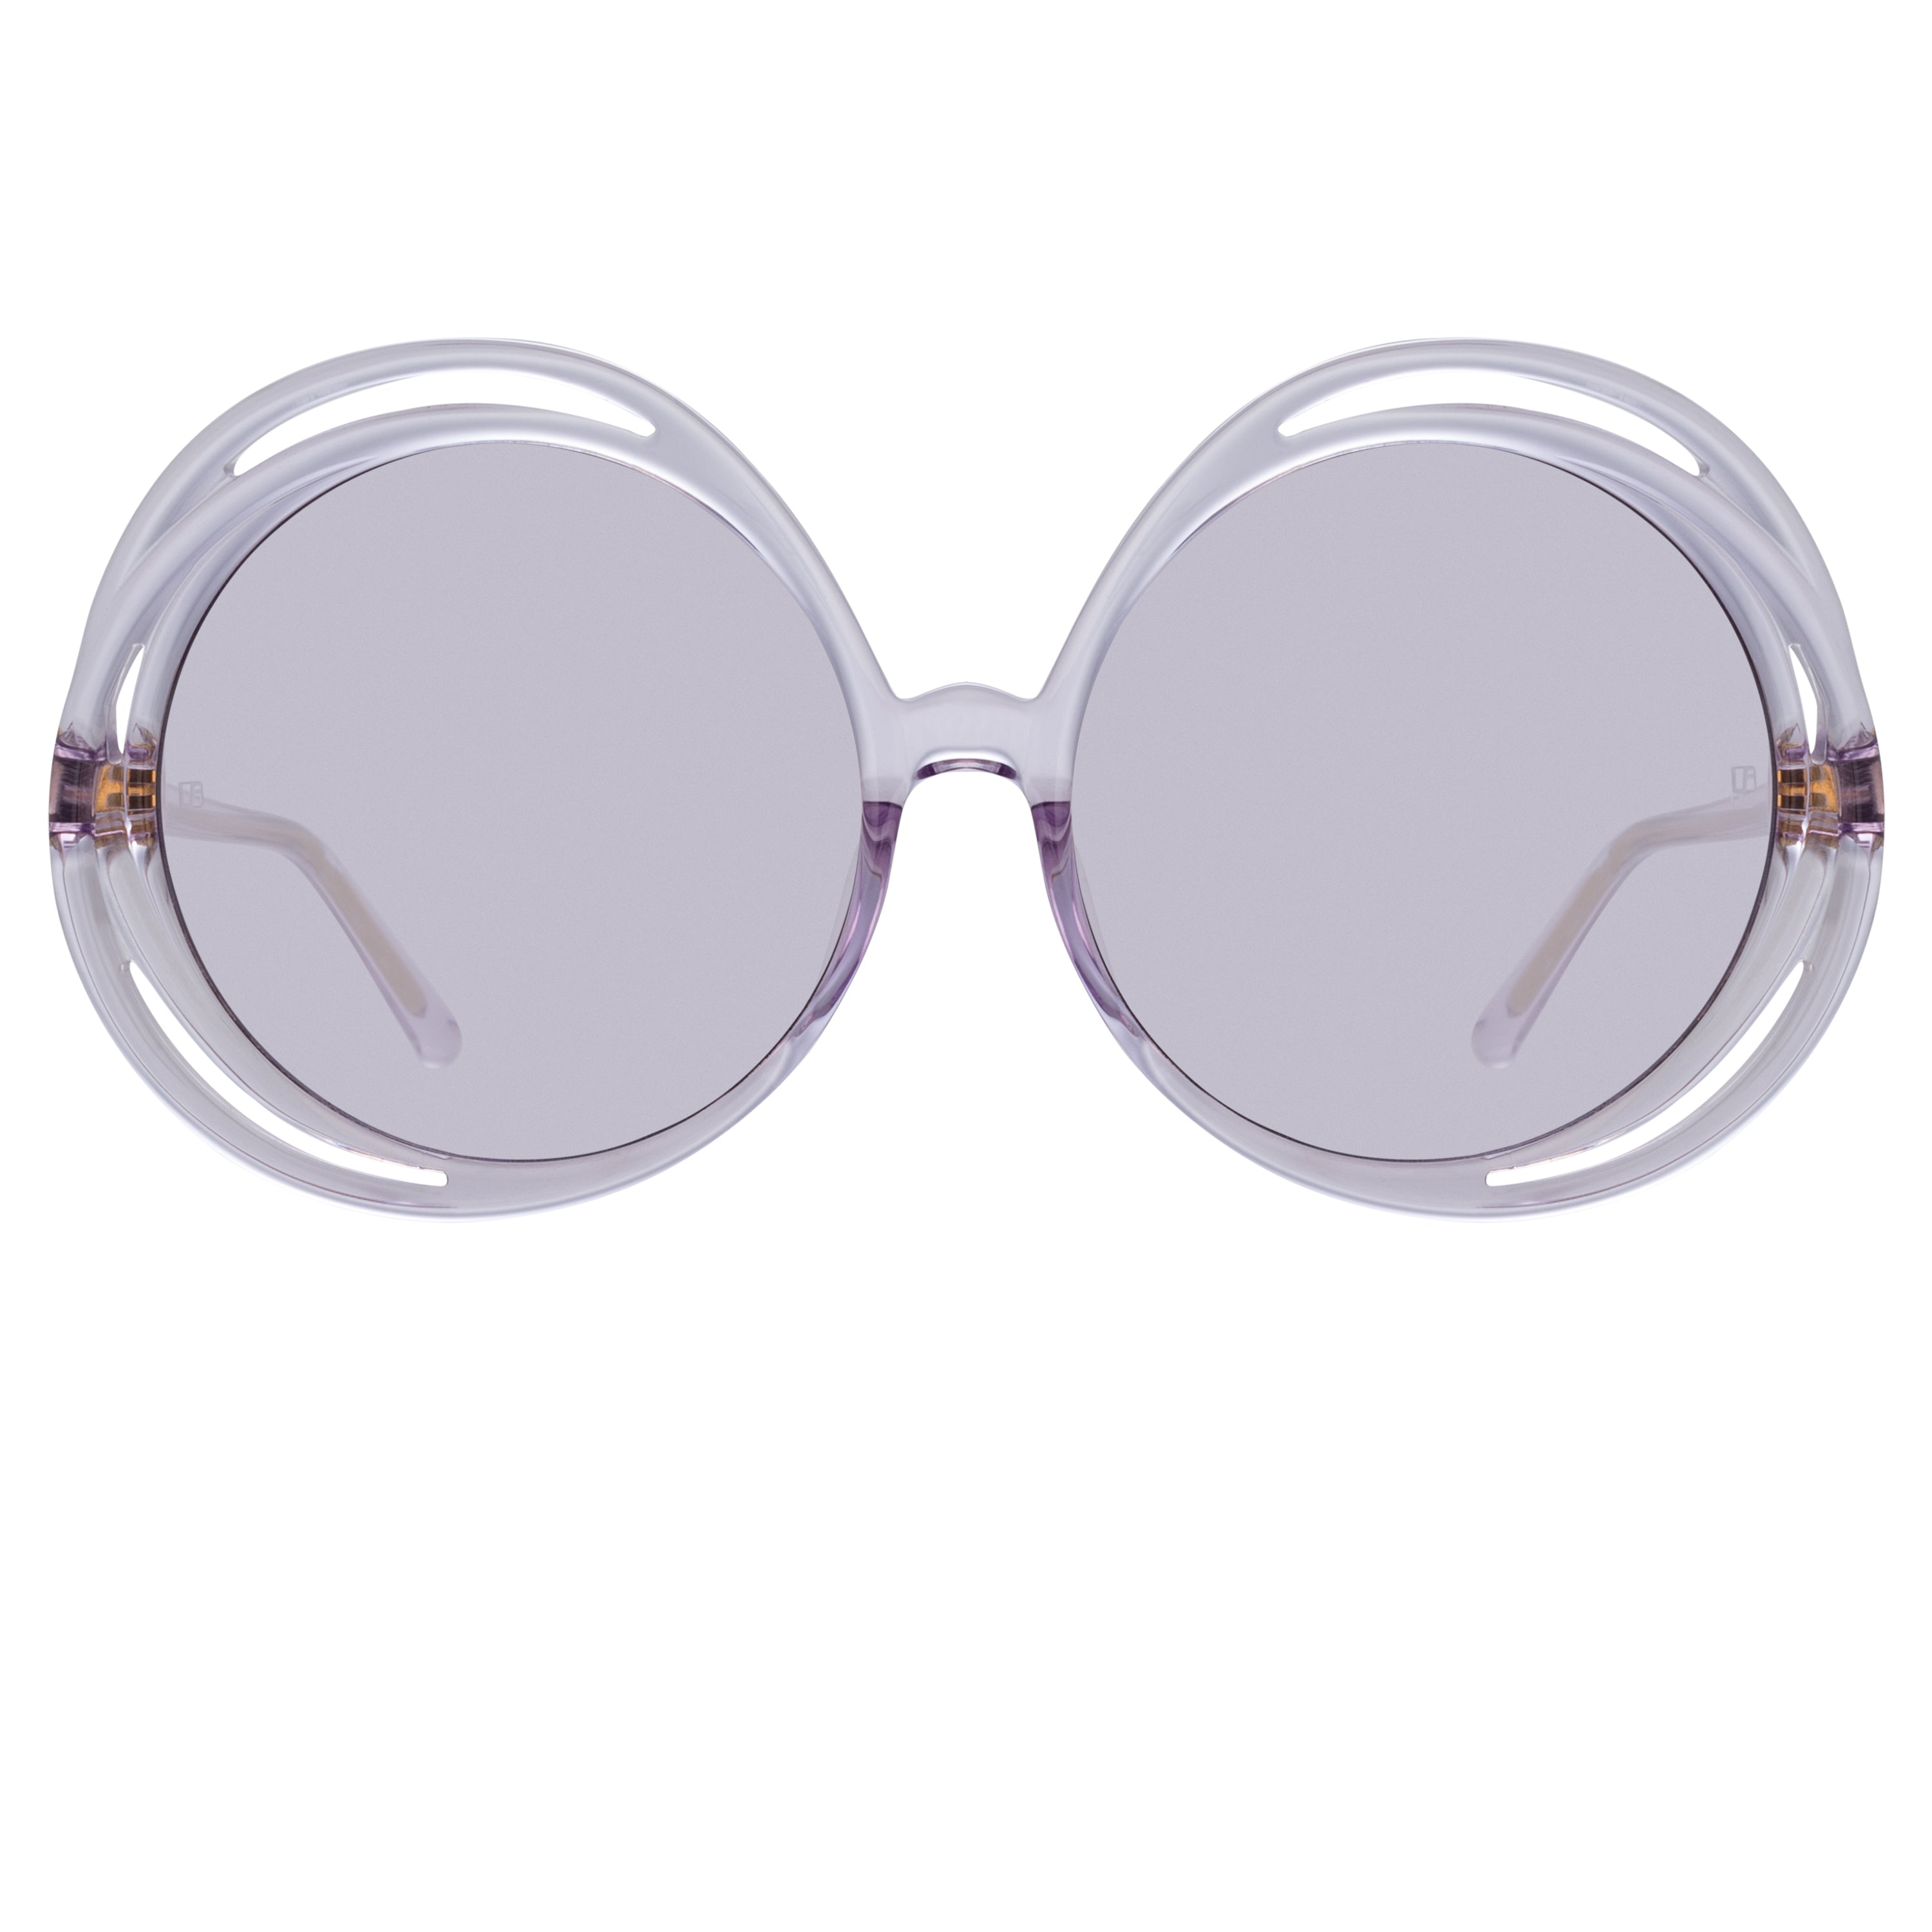 Ellen Round Sunglasses in Lilac